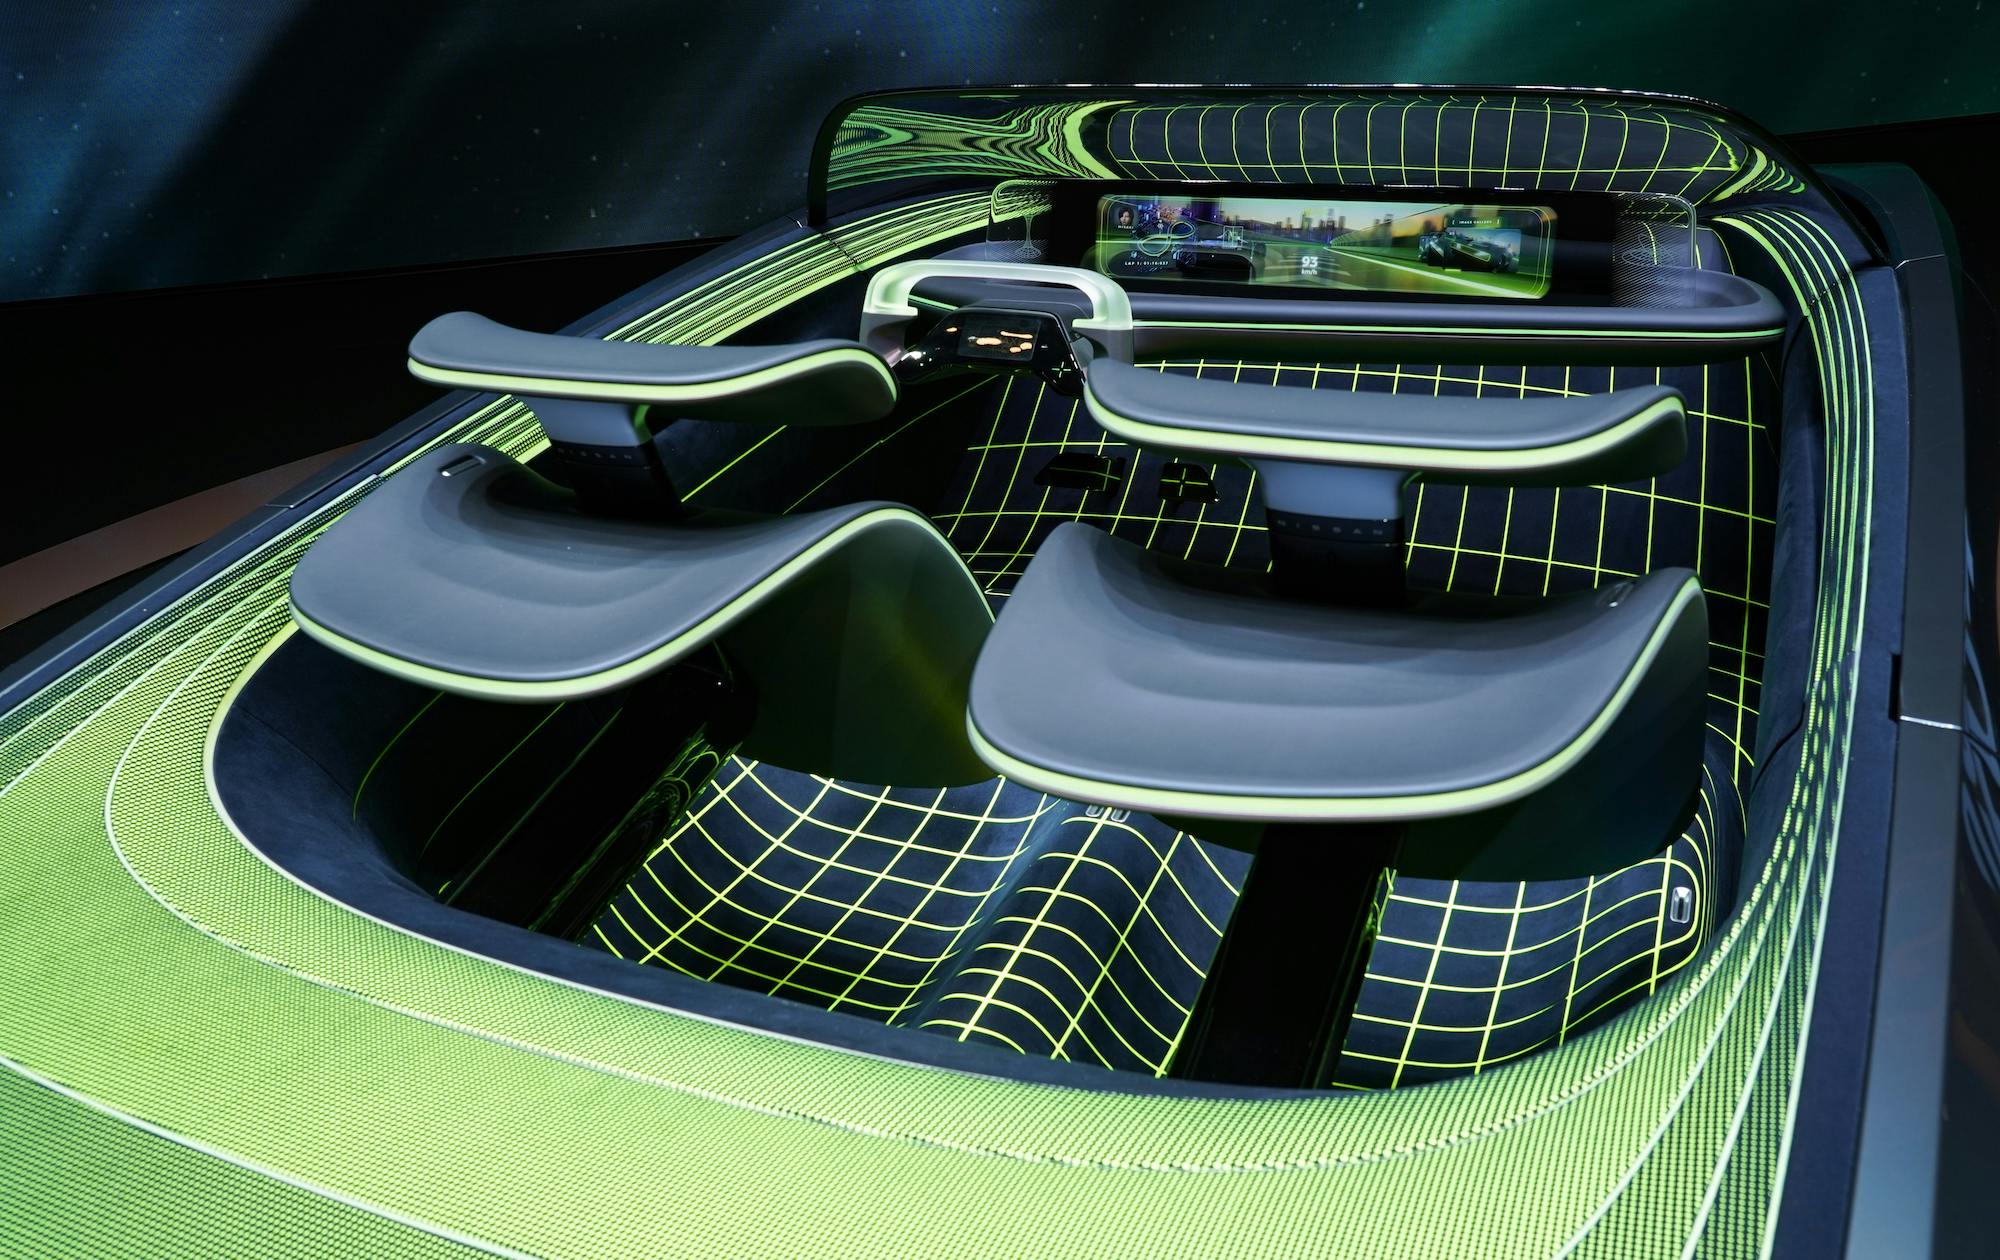 Nissan Max-Out Futuristic Concept Car seats up